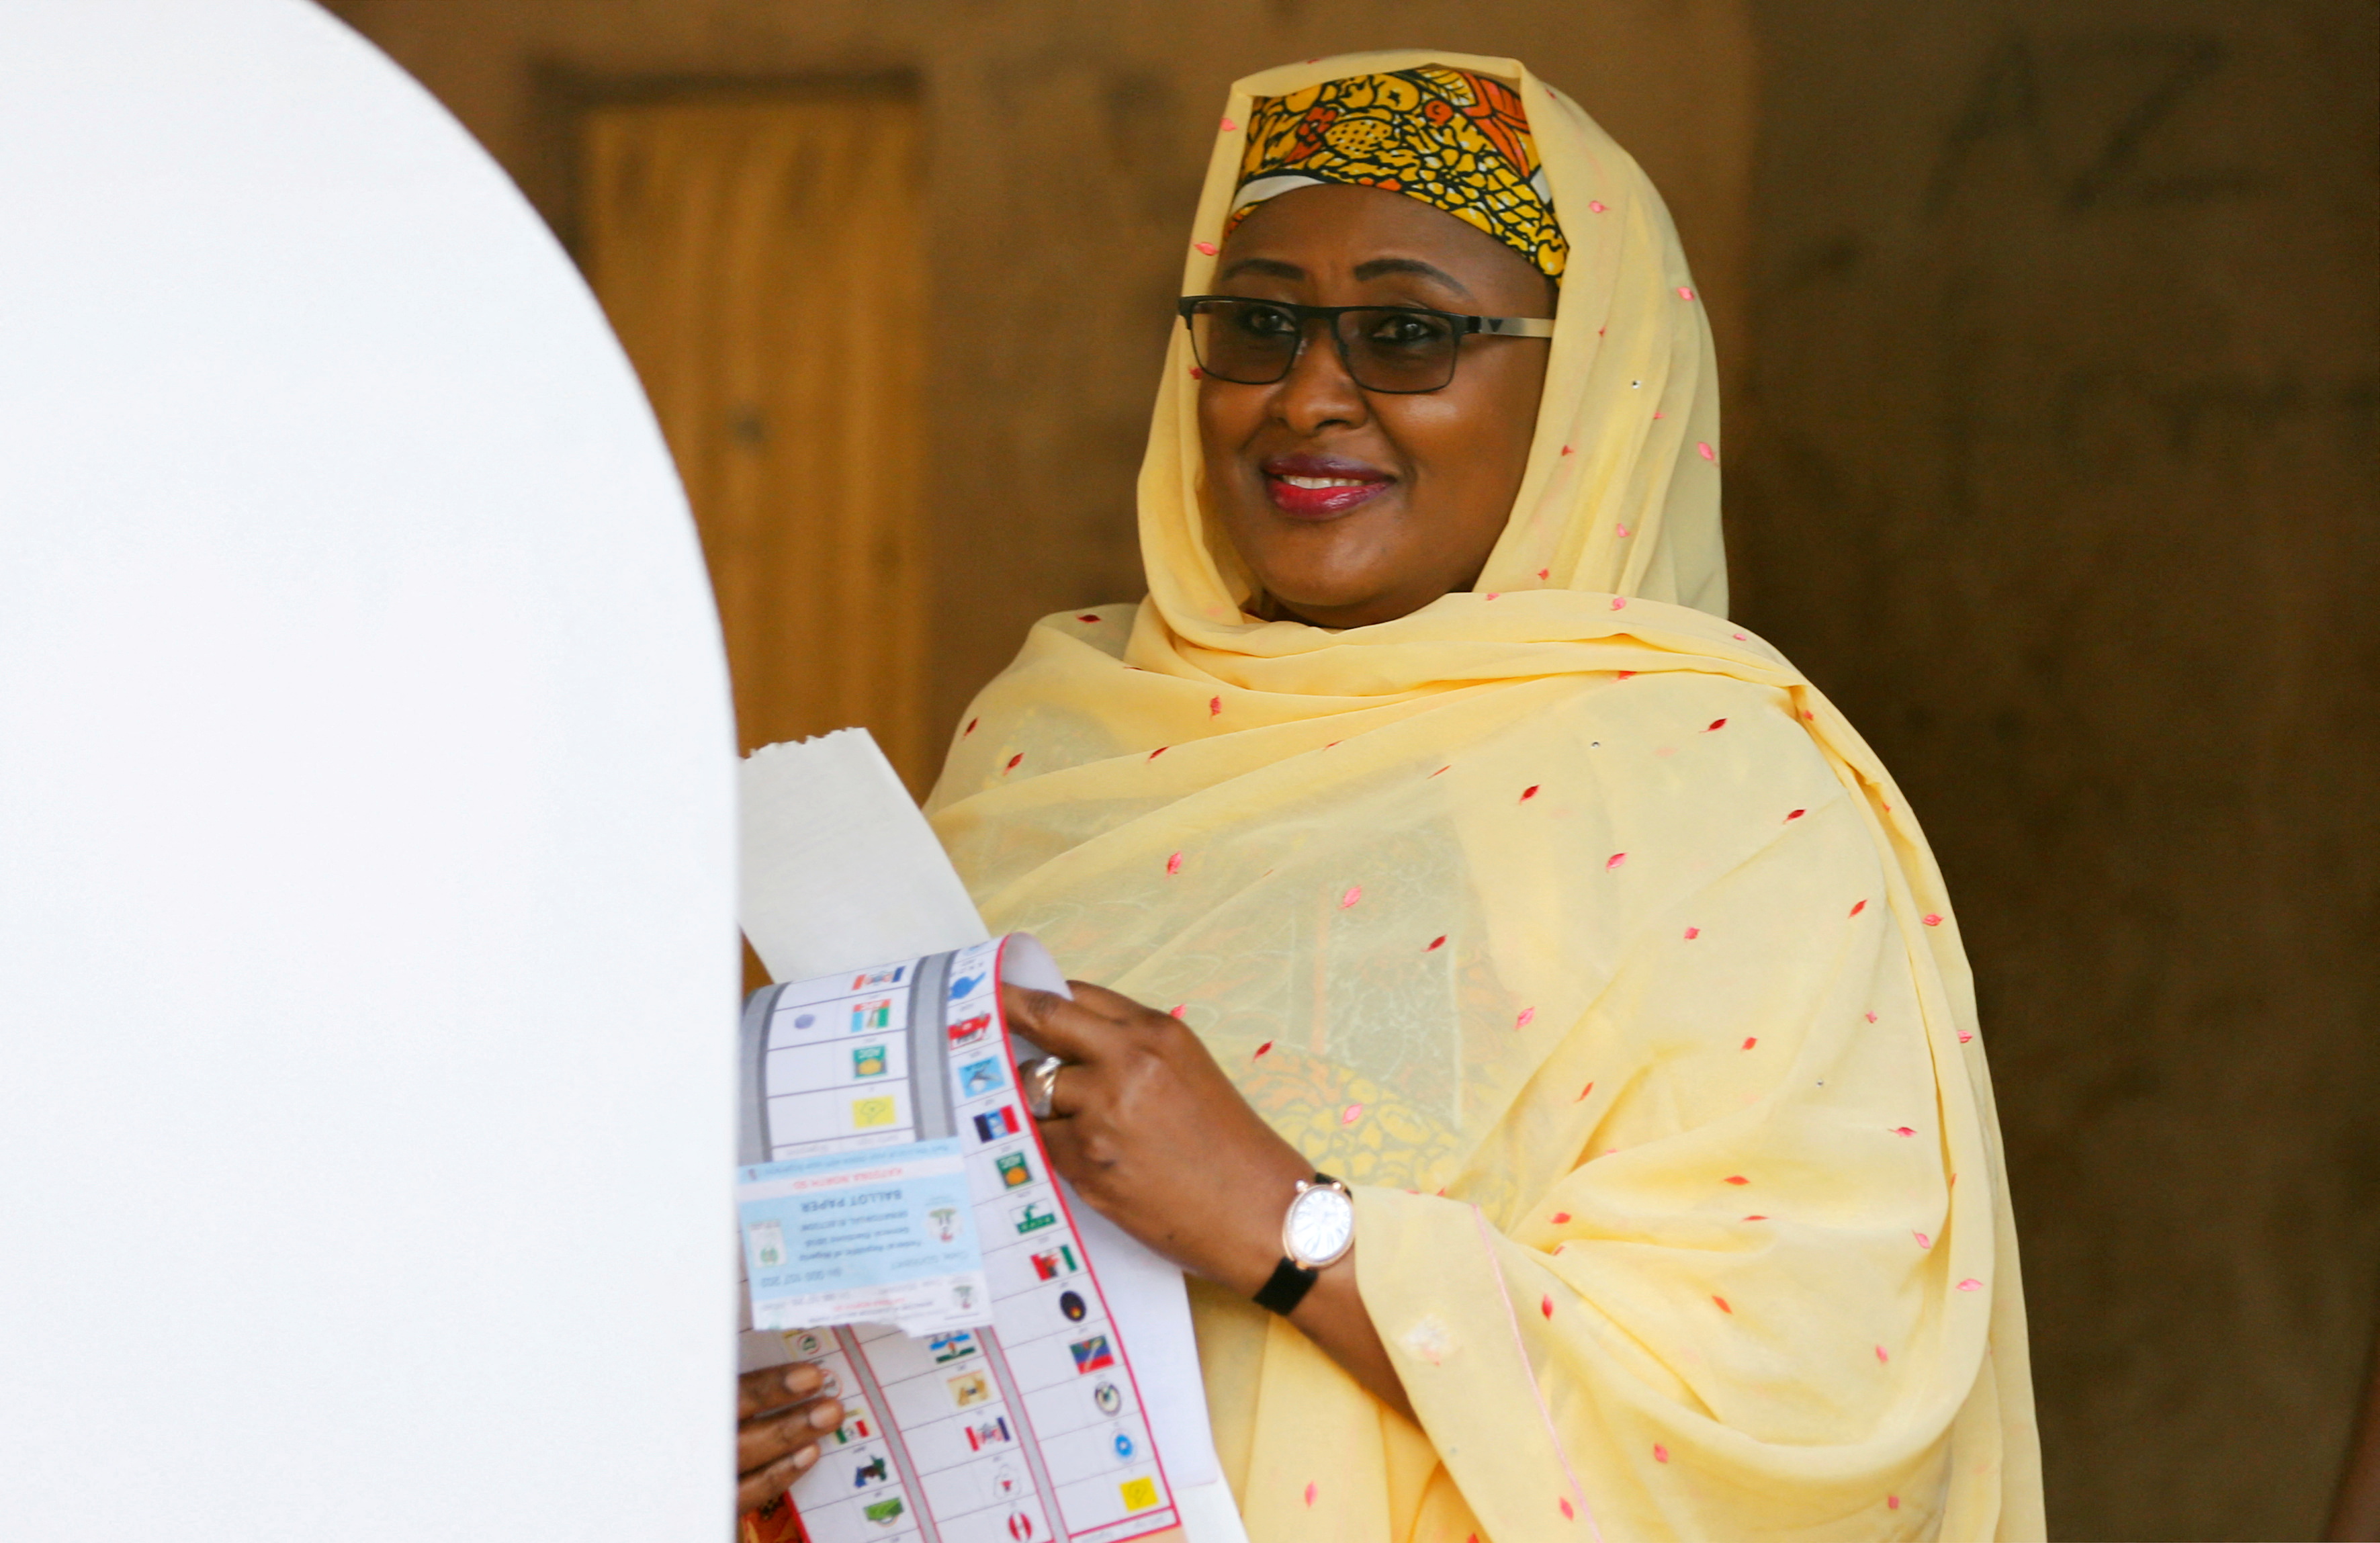 Nigerian President Muhammadu Buhari's wife Aisha Buhari holds a voting ballot as she attends Nigeria's presidential election at a polling station in Daura, Katsina State, Nigeria, February 23, 2019